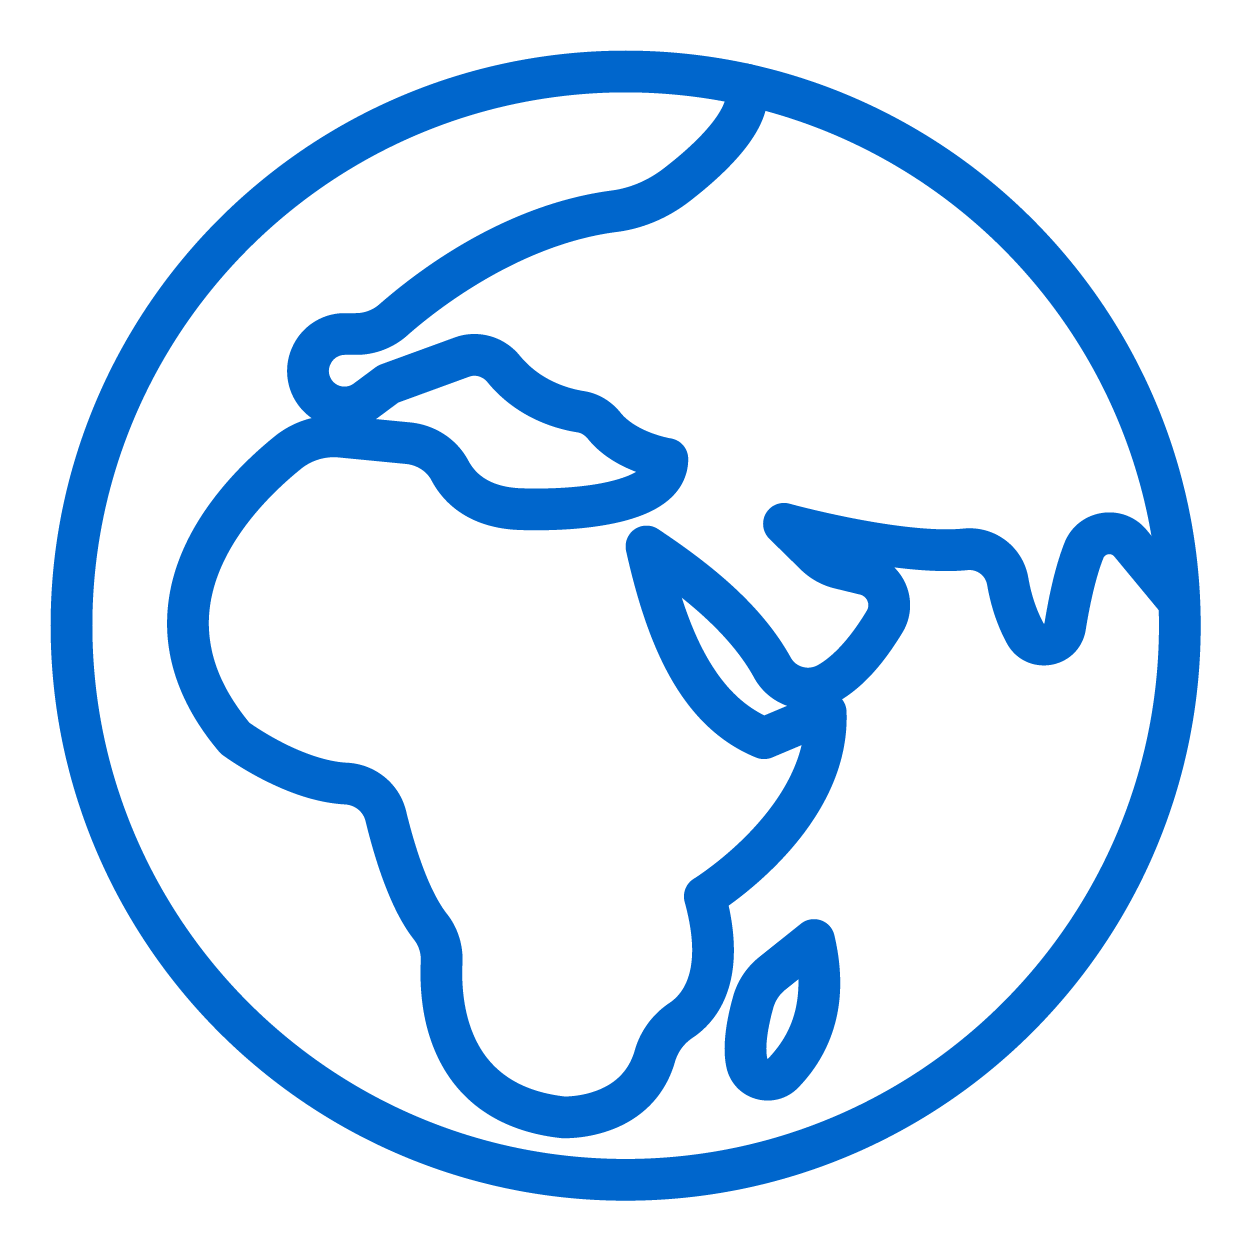 Europe, Middle East, Africa (EMEA) global icon